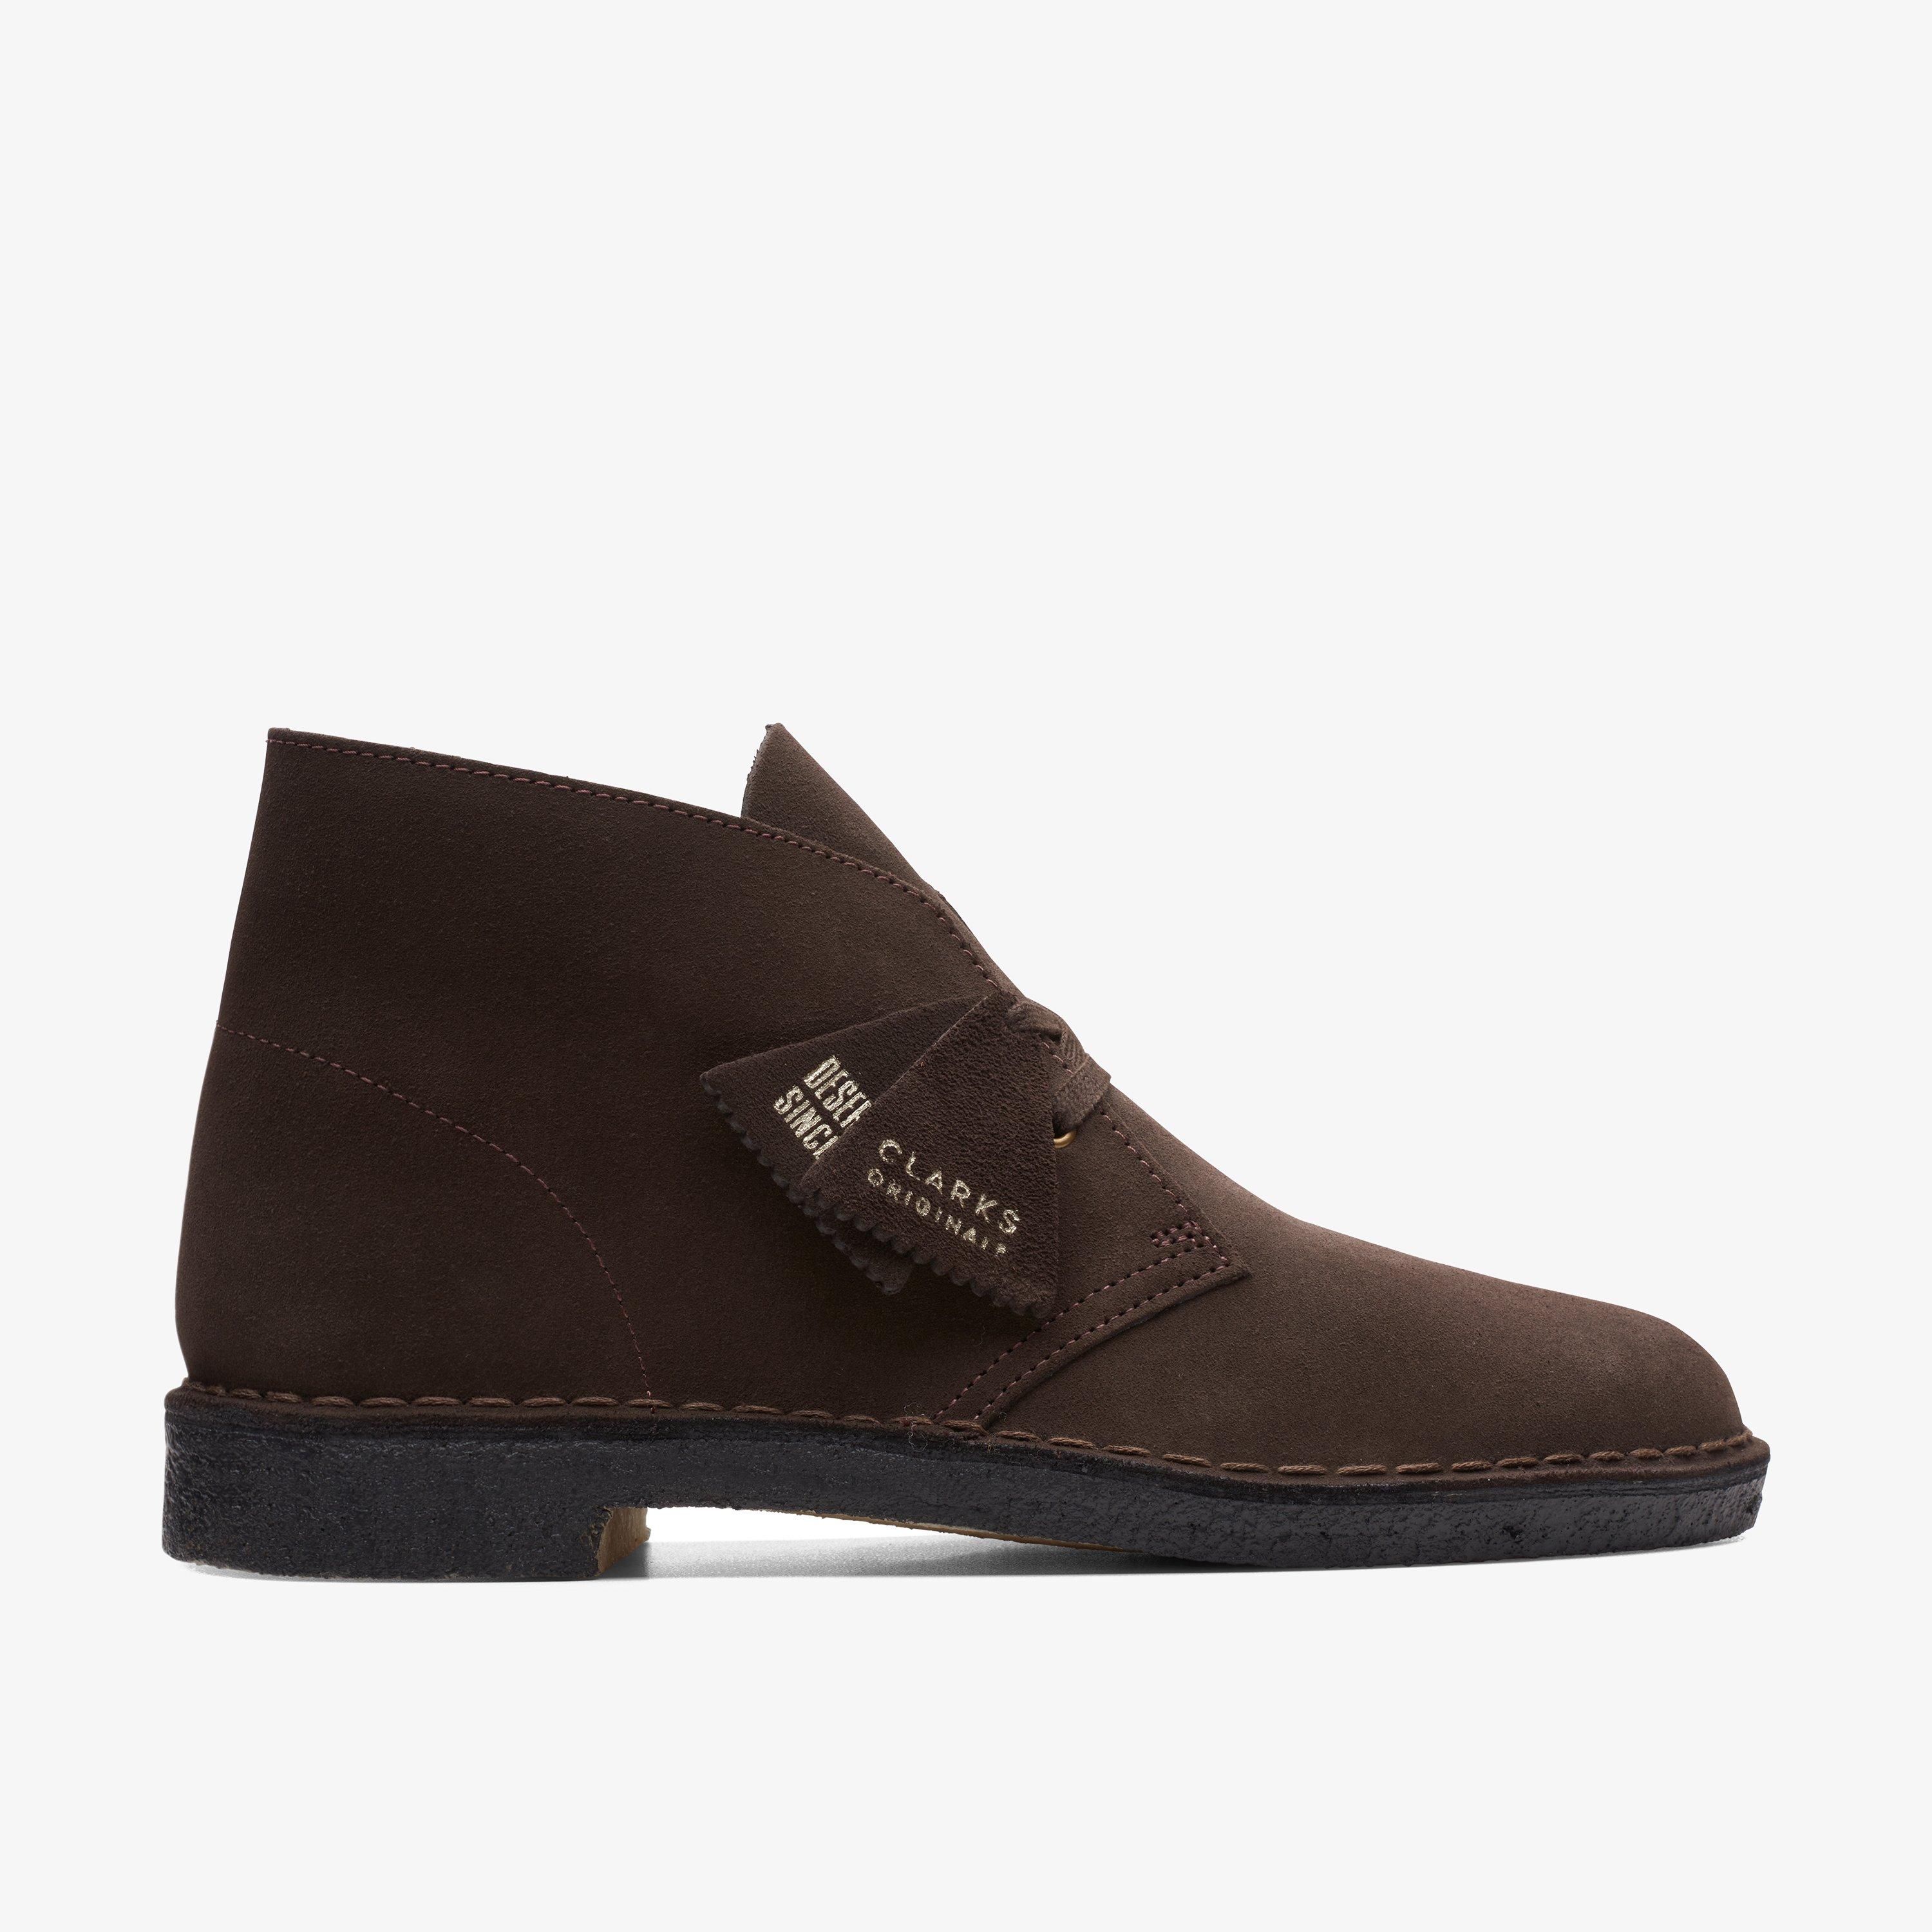 Originals Desert Boots - Leather & Suede Boots | Clarks US